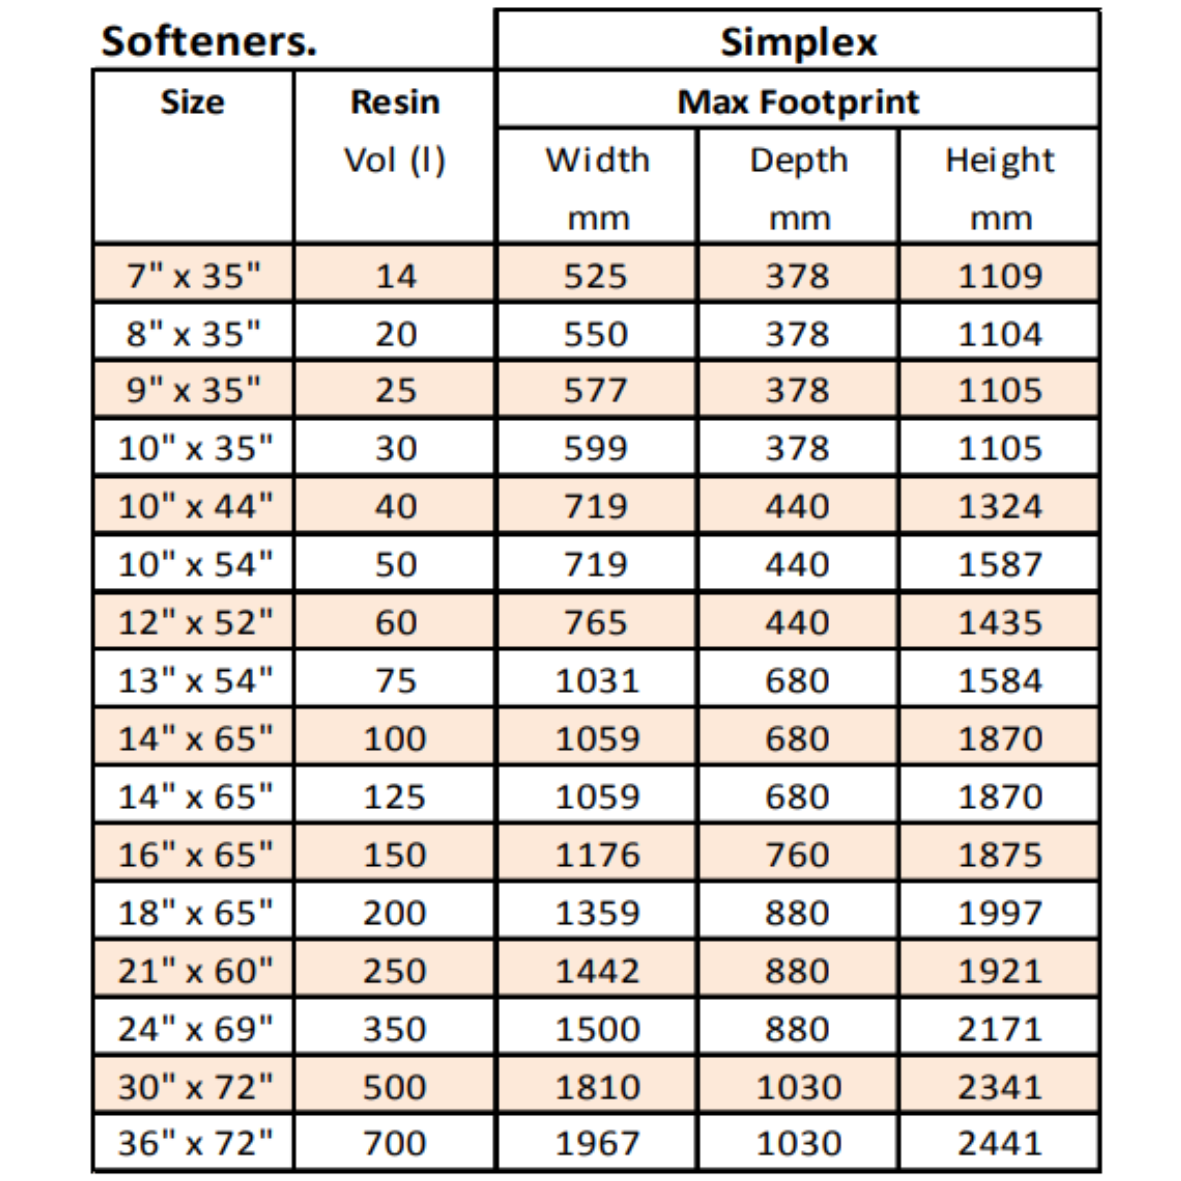 36" x 72", 700L, Simplex Water Softener, Autotrol 298 Time Controller, 17m³/h